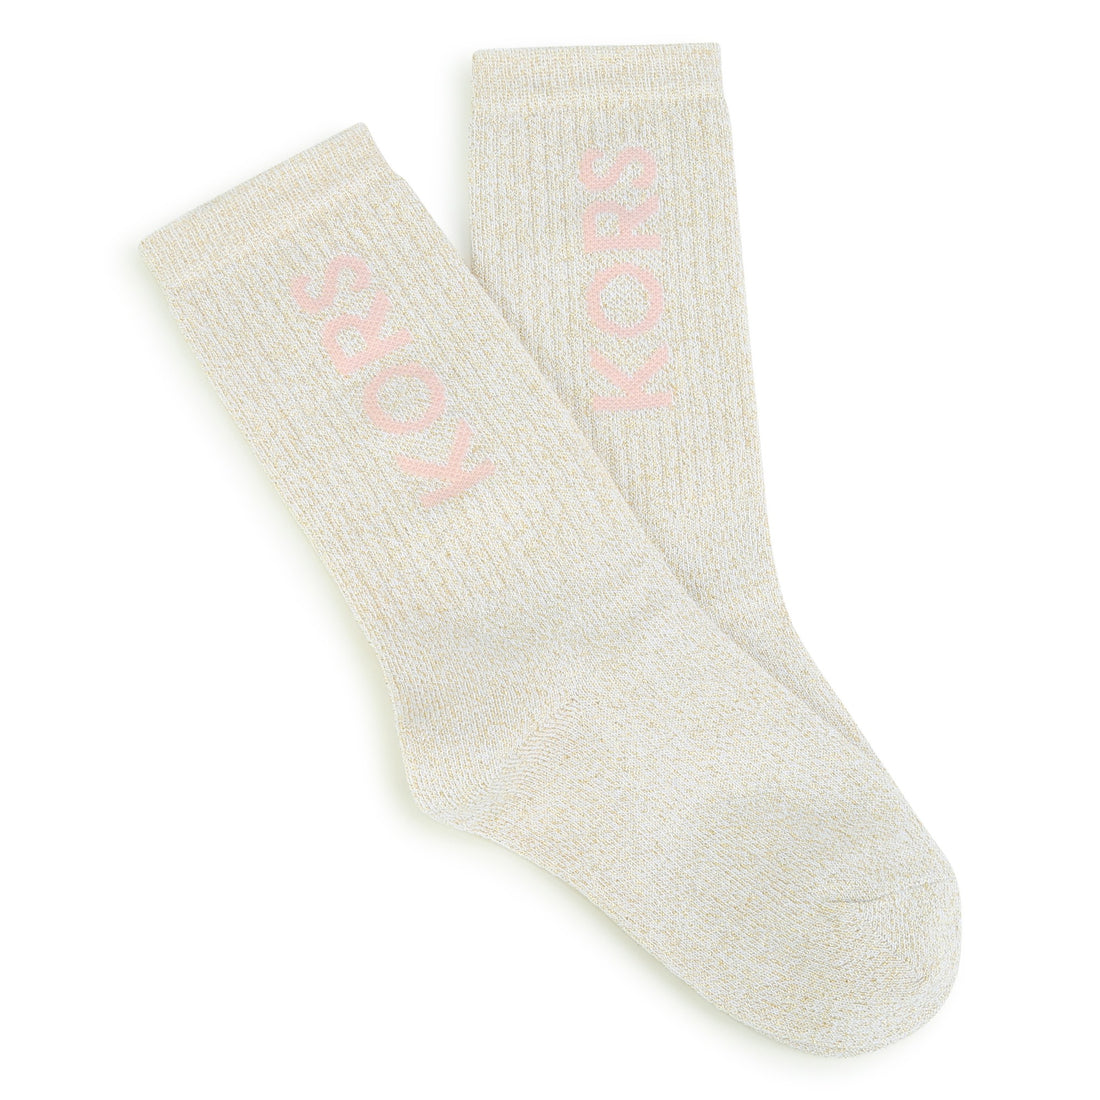 Michael Kors Socks Style: R10182